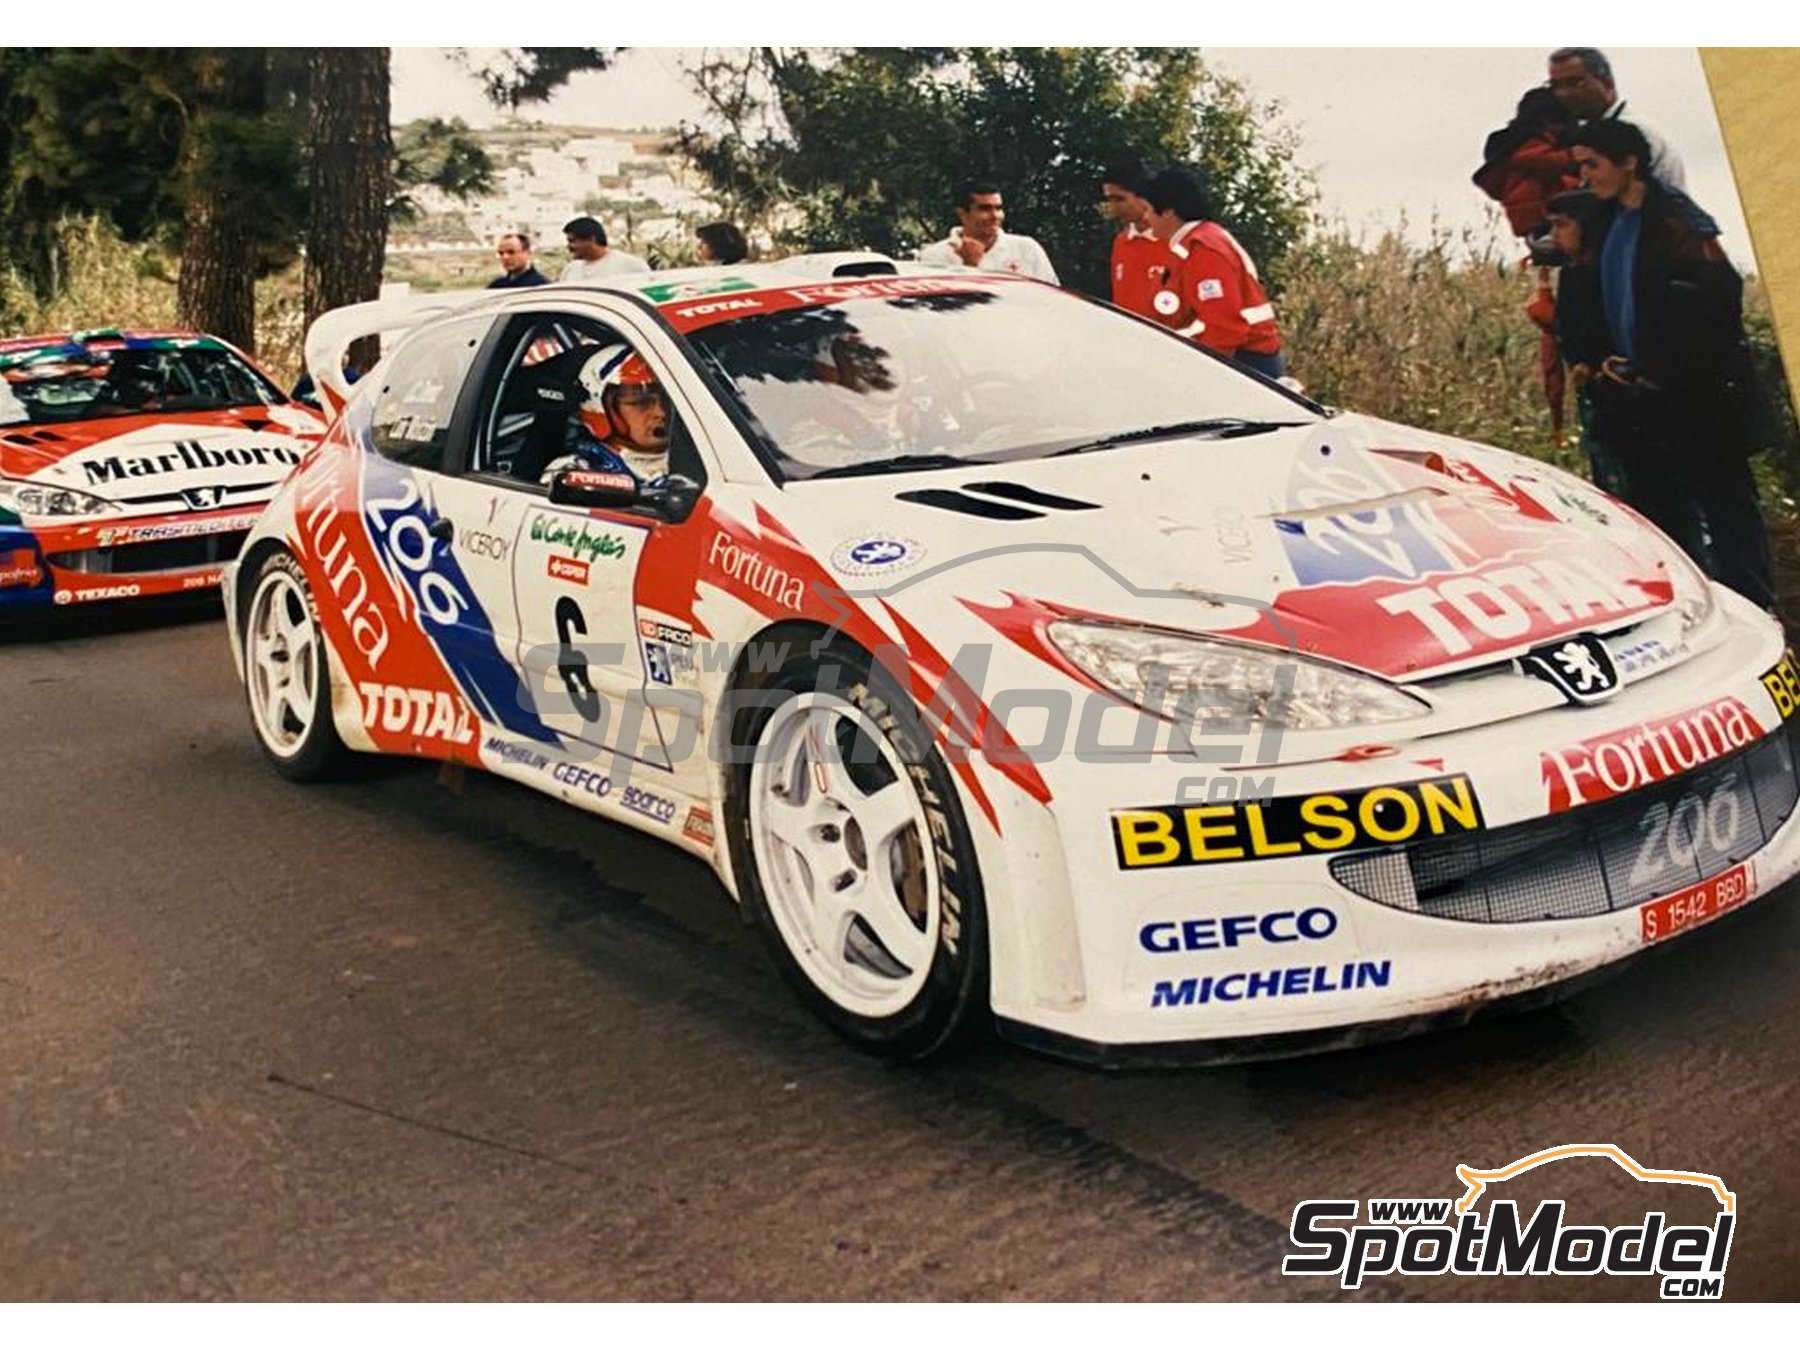 DECALS 1/43 REF 0403 PEUGEOT 206 WRC THIRY RALLYE MONTE CARLO 2002 BASTOS RALLY